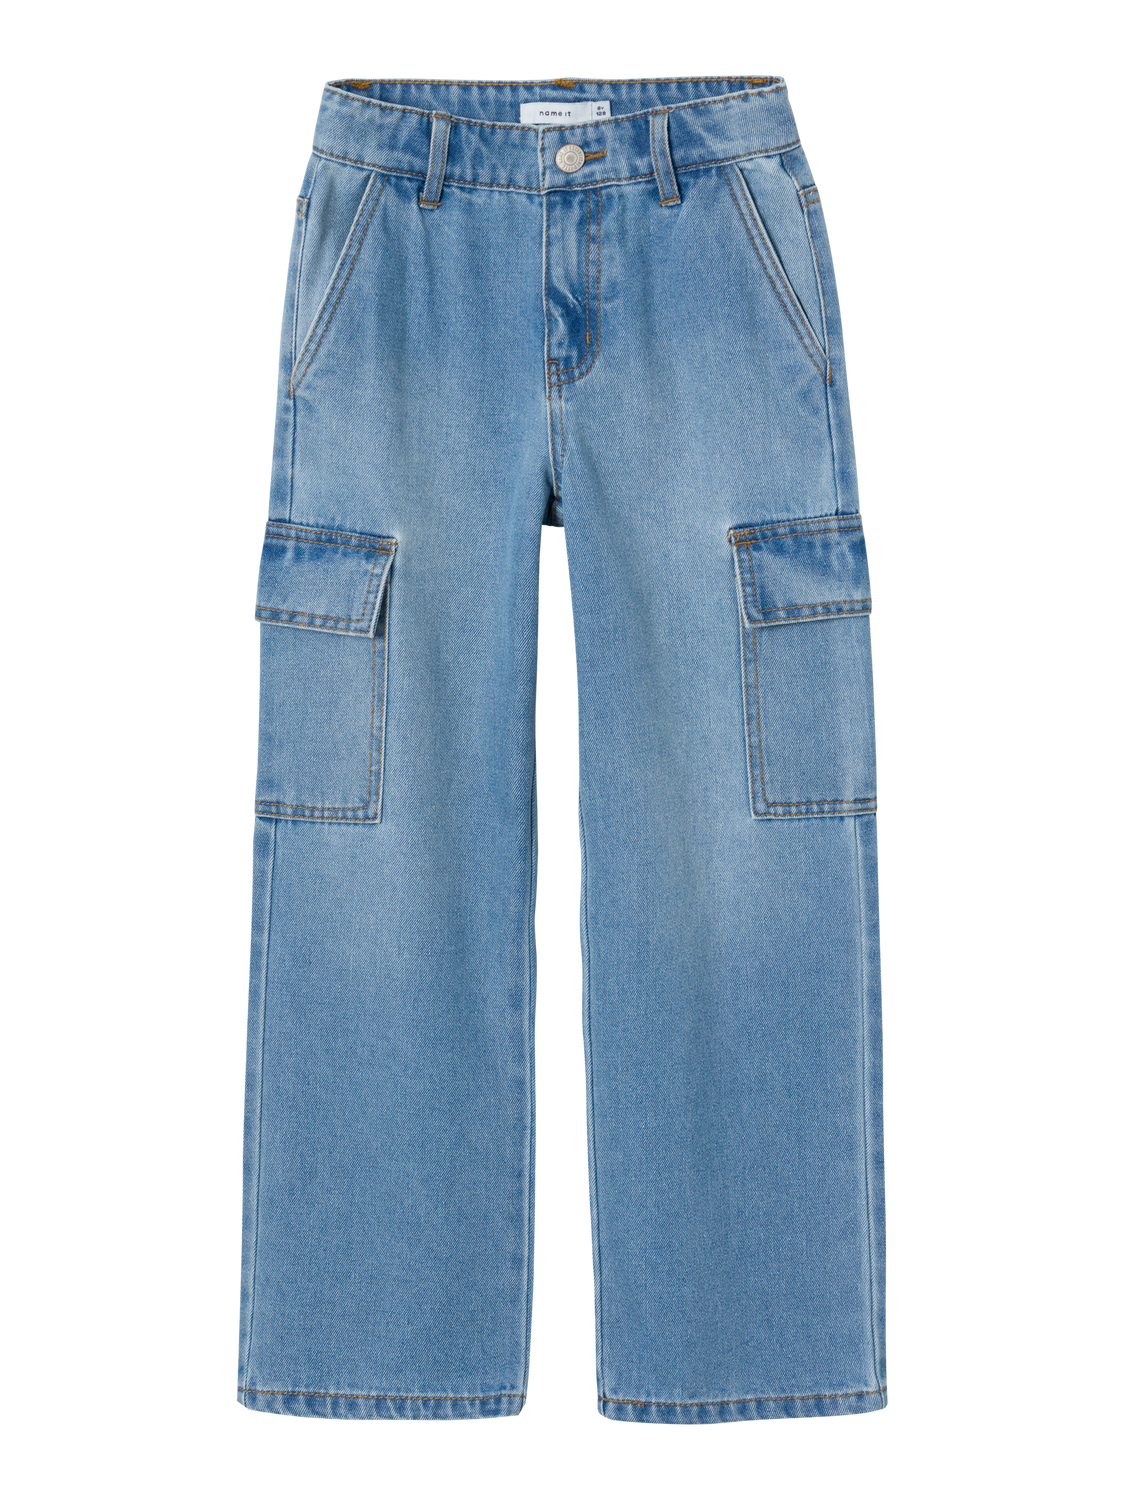 NKFROSE Jeans - Light Blue Denim